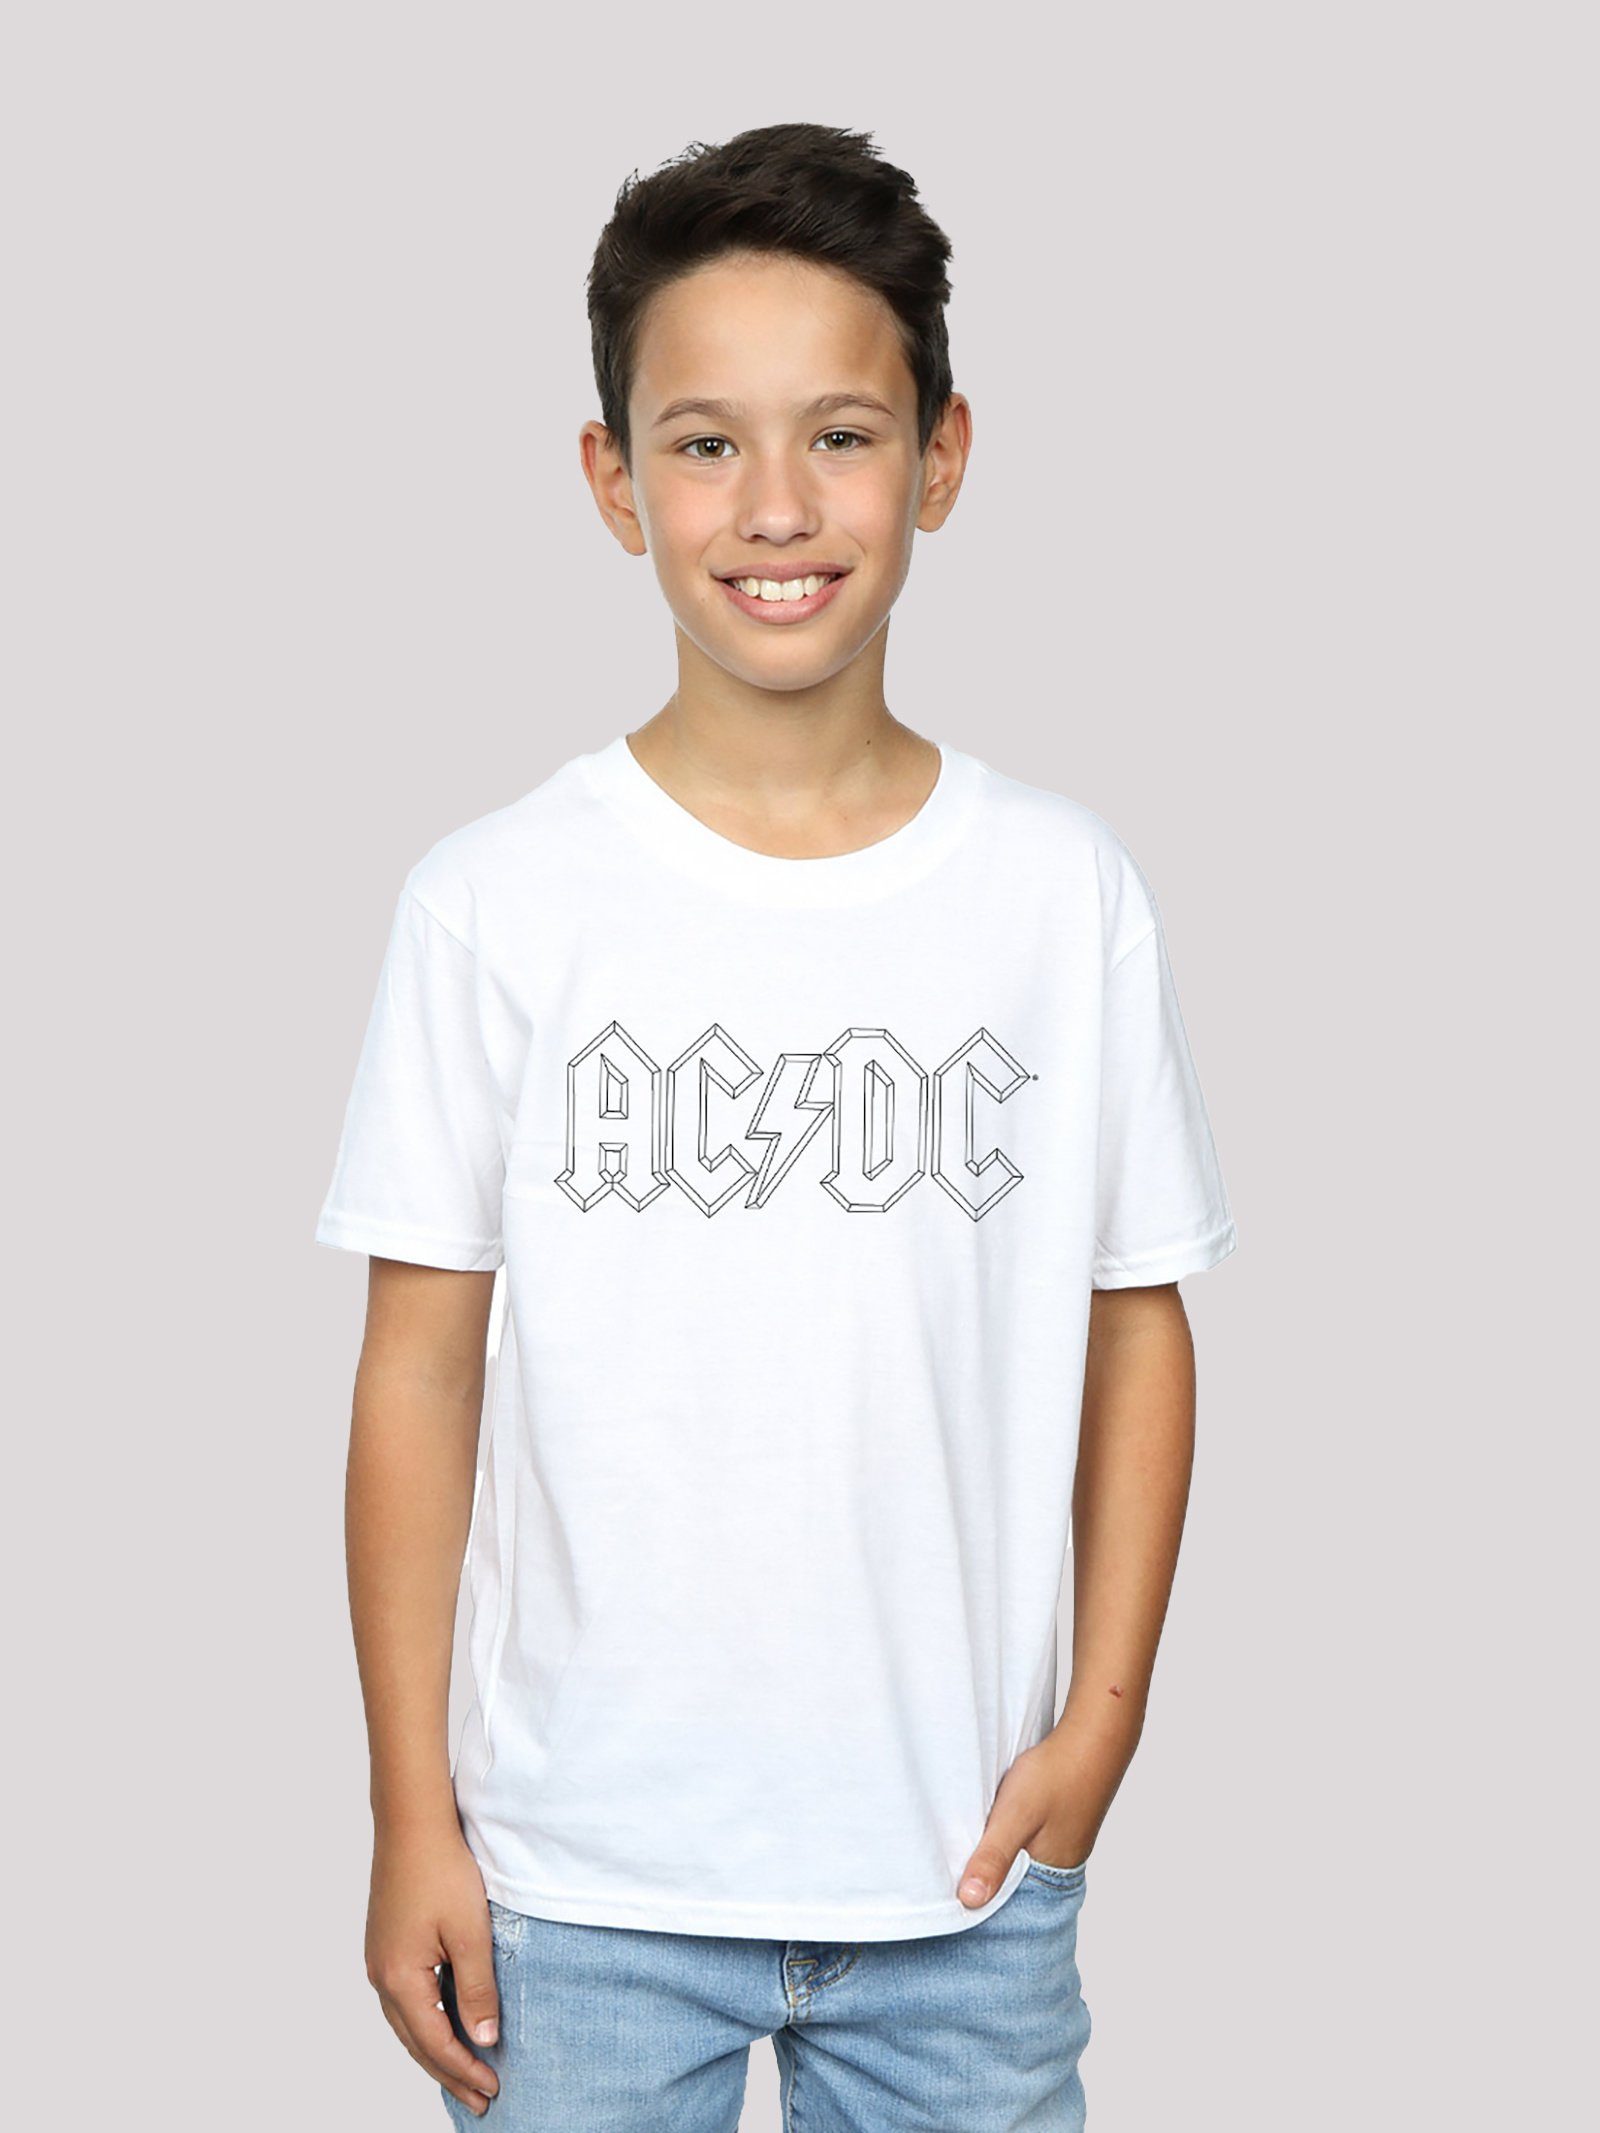 F4NT4STIC T-Shirt Black Metal Musik Merch,Jungen,Mädchen,Bandshirt Rock - Outline Merch ACDC Unisex Premium Kinder,Premium Fan Logo